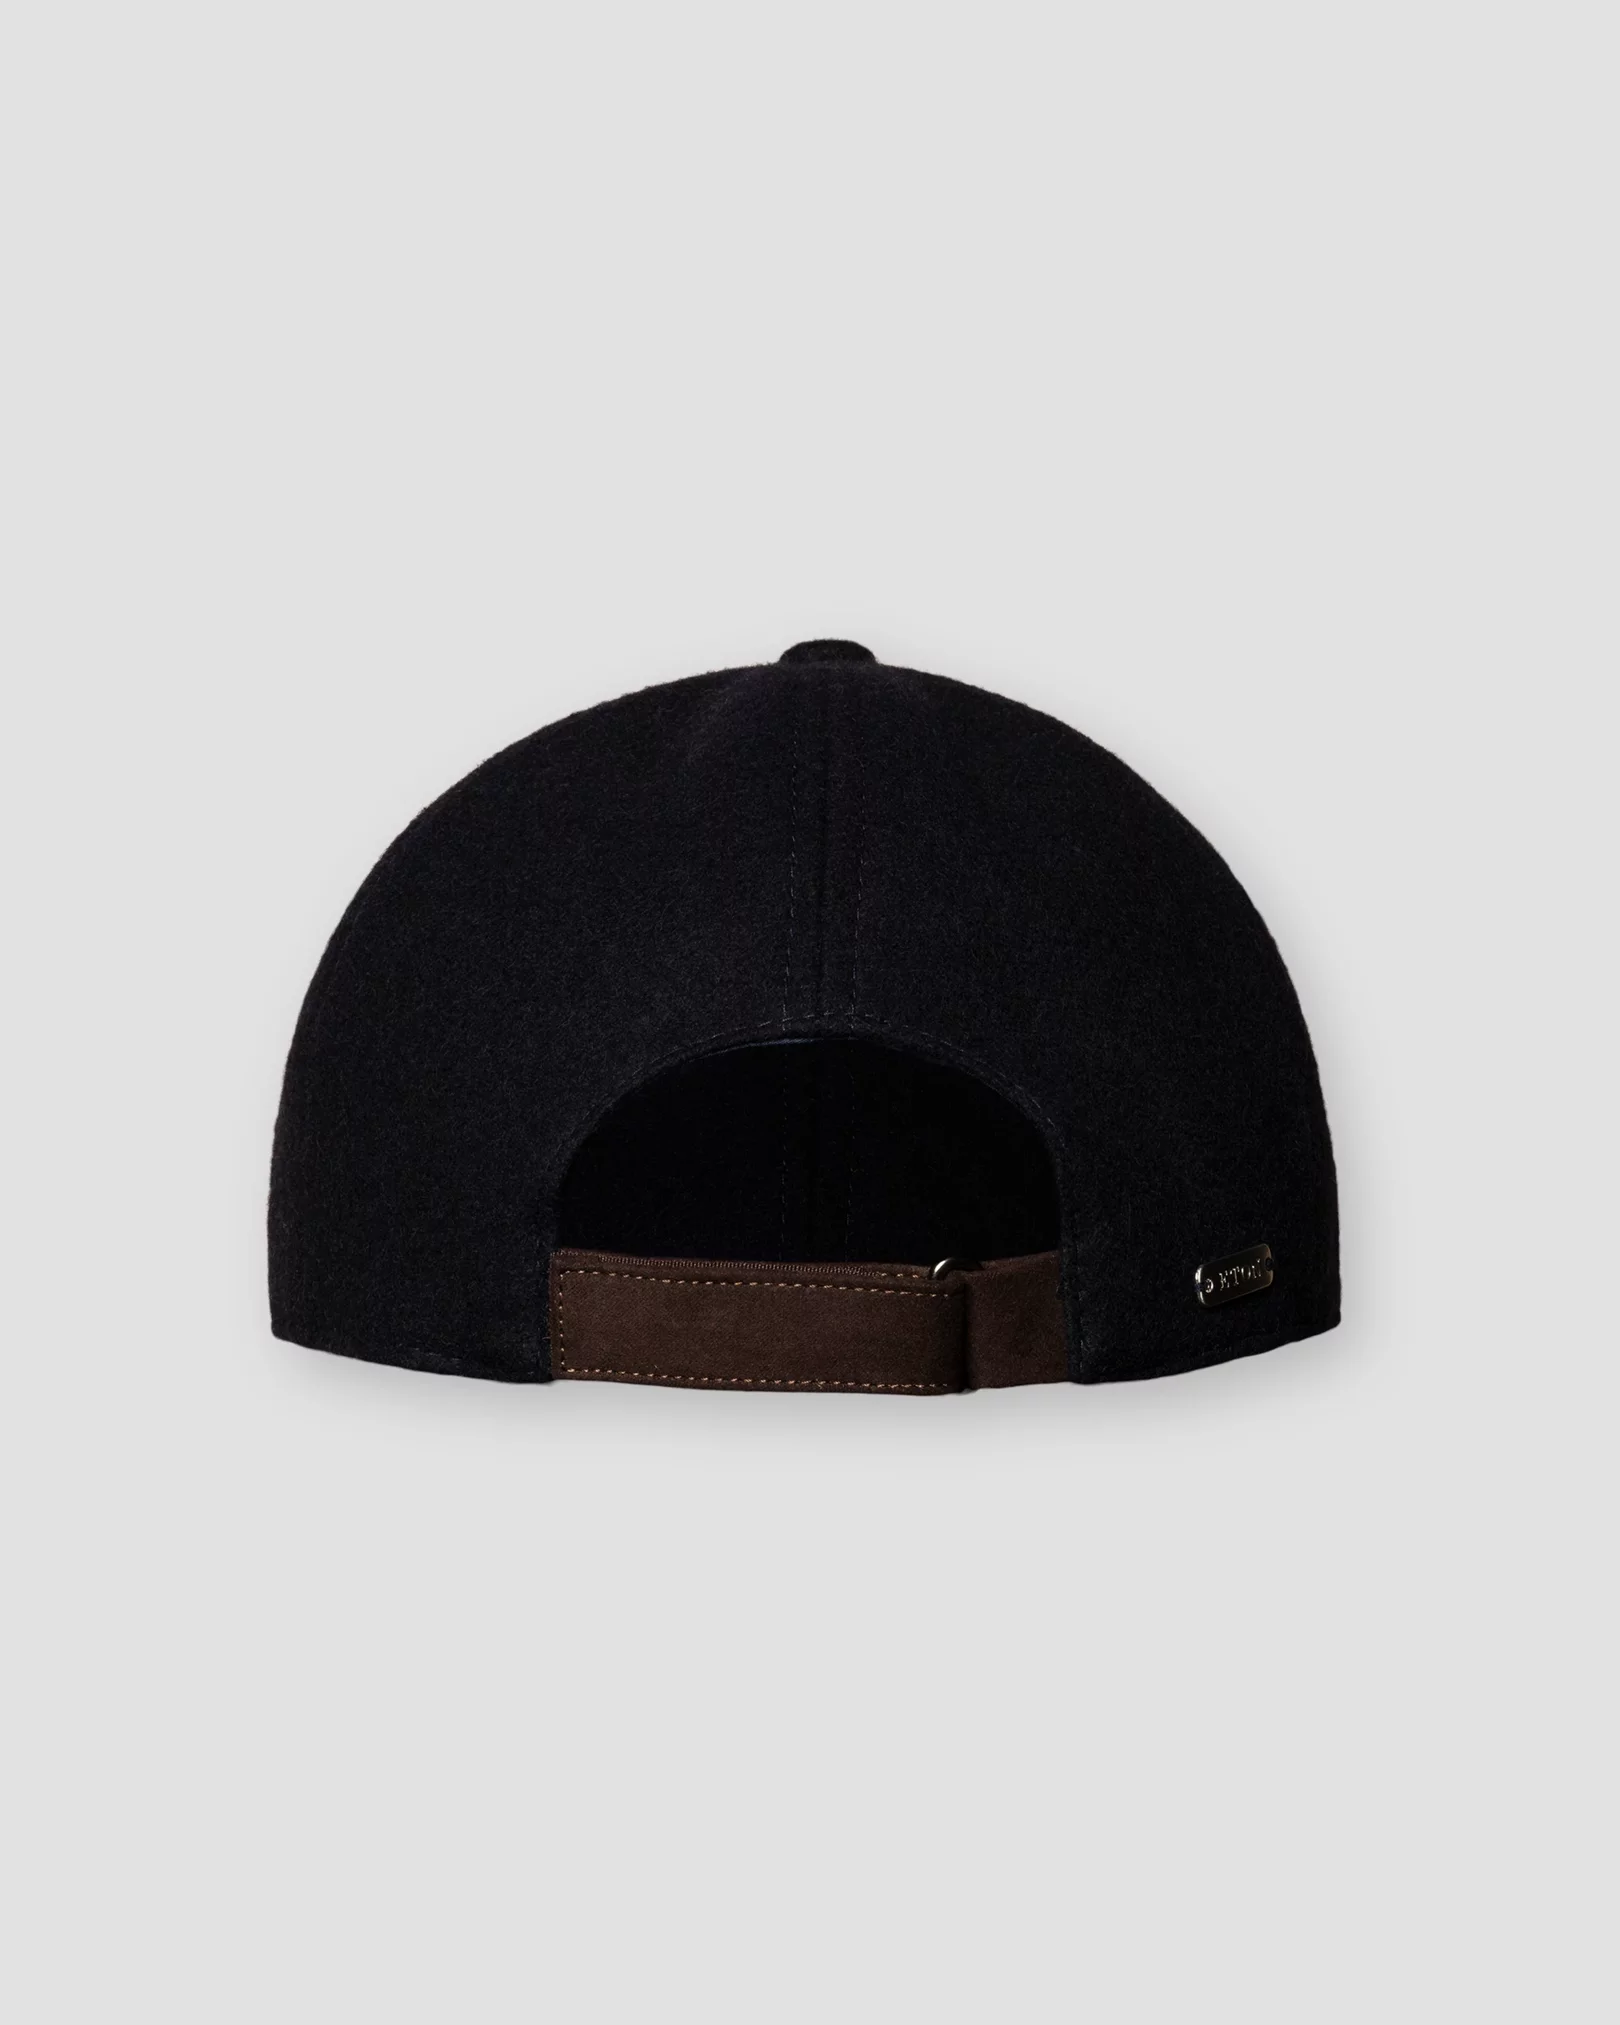 Eton - navy blue cap